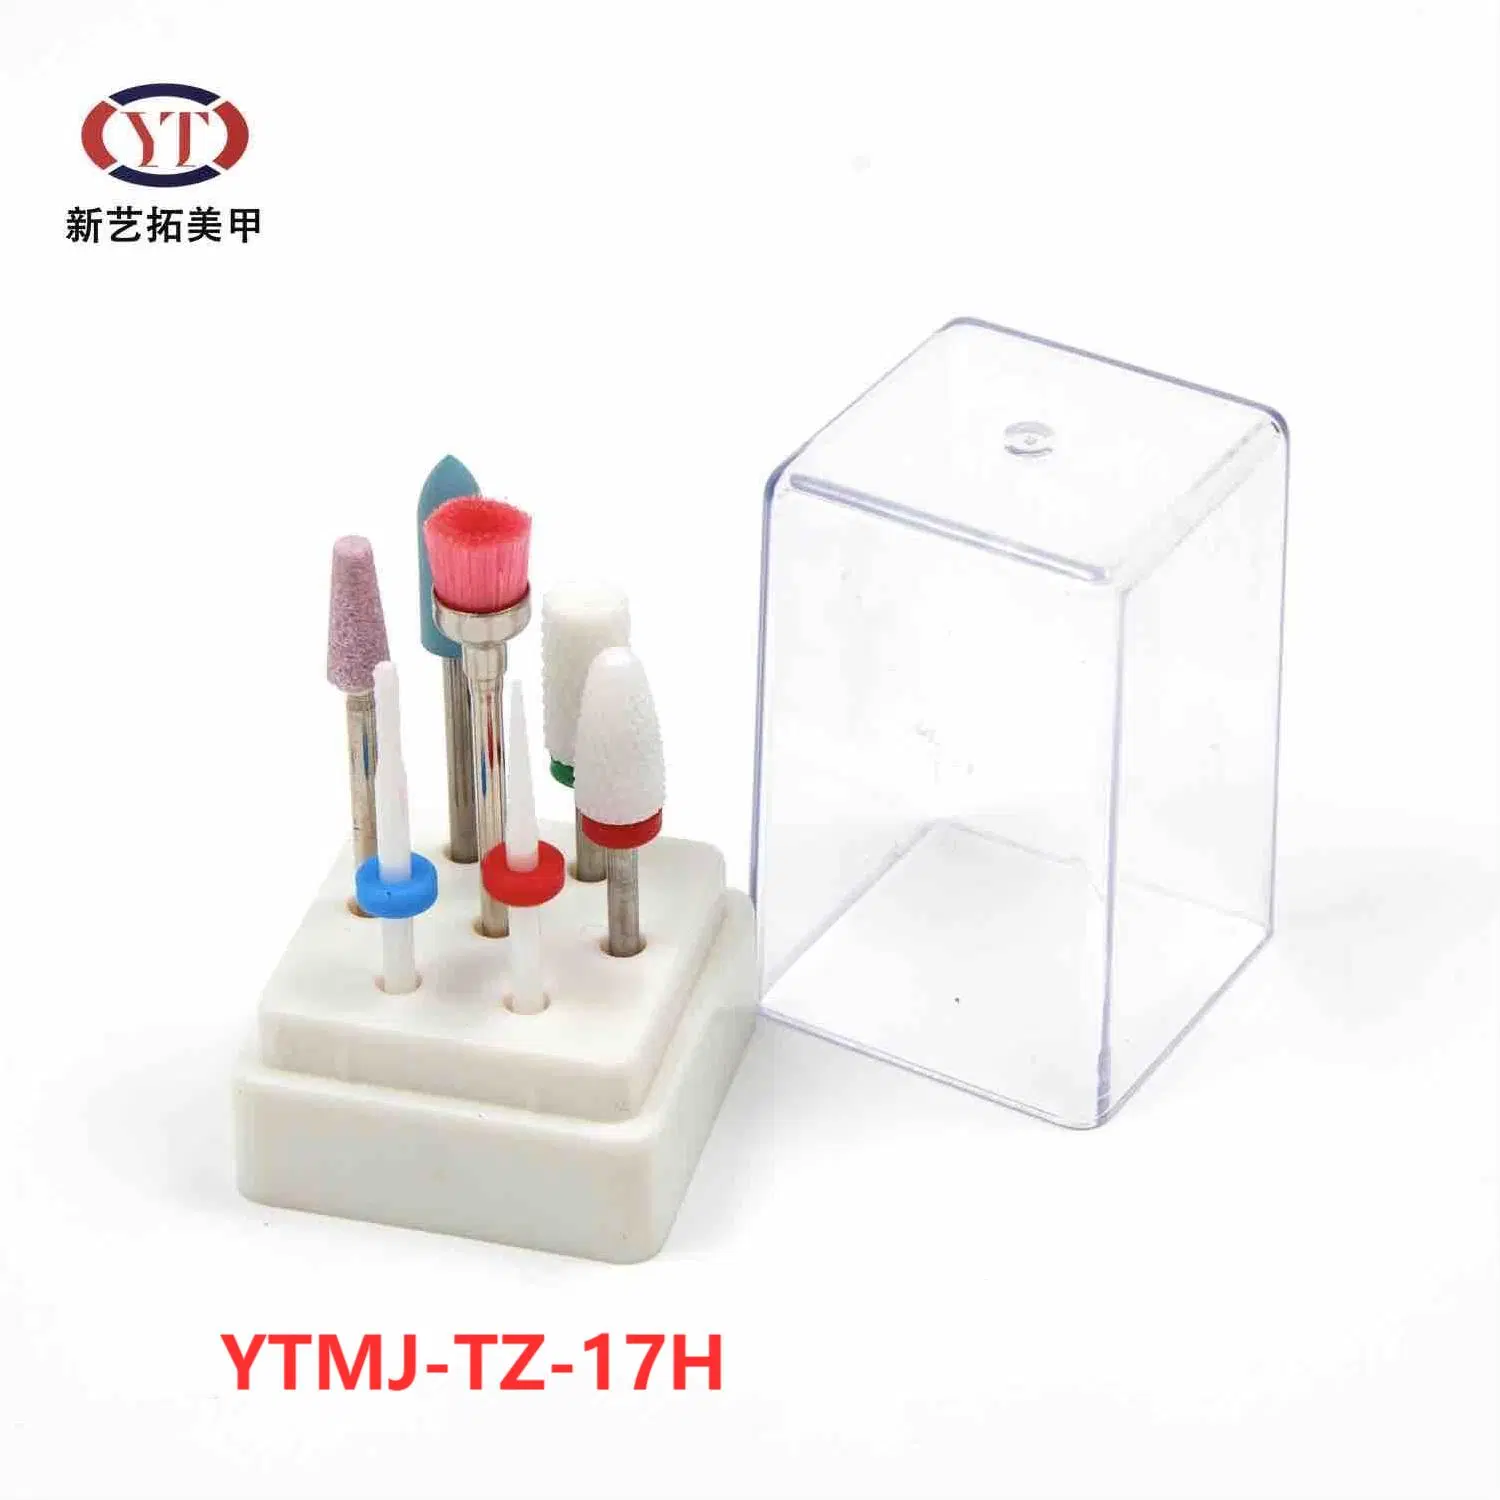 Ytmj-TZ-17h 7 PCS Tungsten Carbide السيراميك Nail Drill Bits set لقمة طحن دلّات ملف الحلي باستخدام ميزة المناور الكهربائية